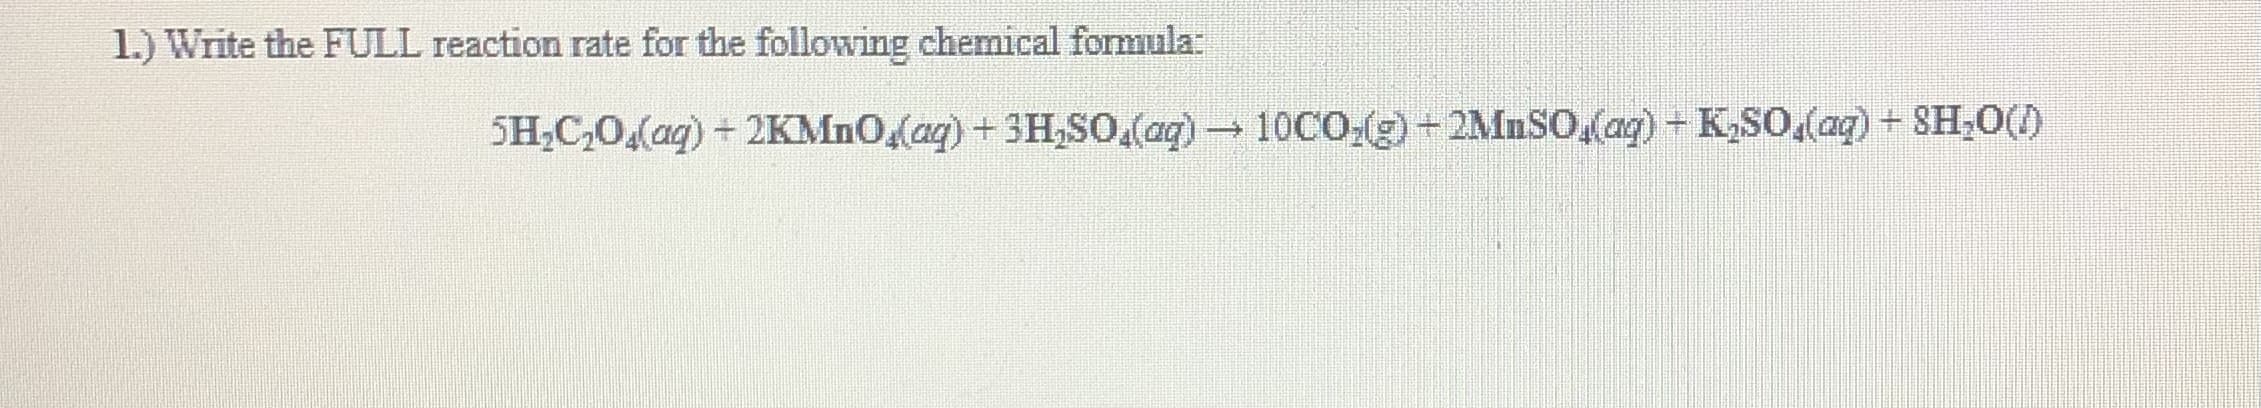 1.) Write the FULL reaction rate for the following chemical formula:
5H;C,0,(ag) + 2KMNO,(aq) + 3H,So.(aq) 10CO,(g+ 2MnSO,(aq) + K,SO,(aq) + SH,0()
